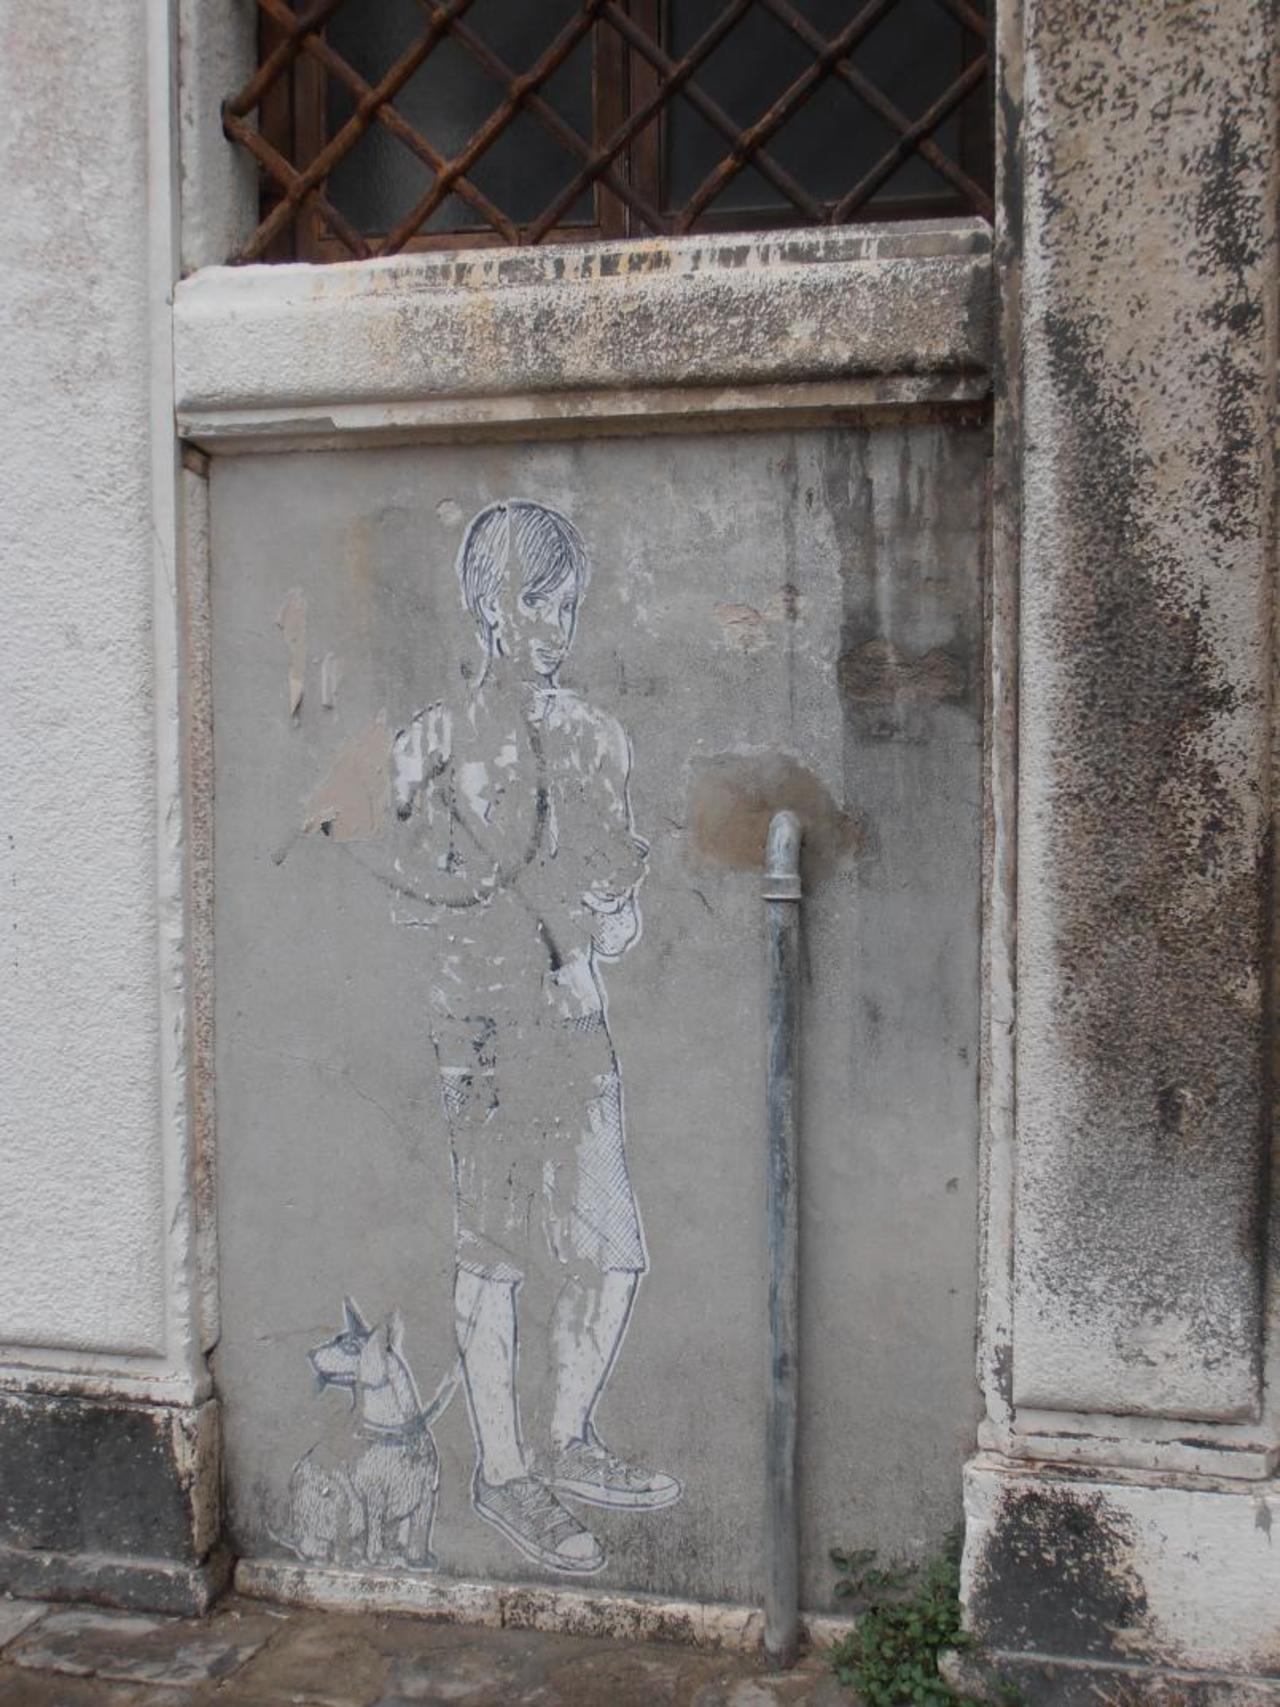 RT @AliciaDCrumpton: #graffiti #streetart #veniceitaly https://t.co/tYMCSjMQ7t